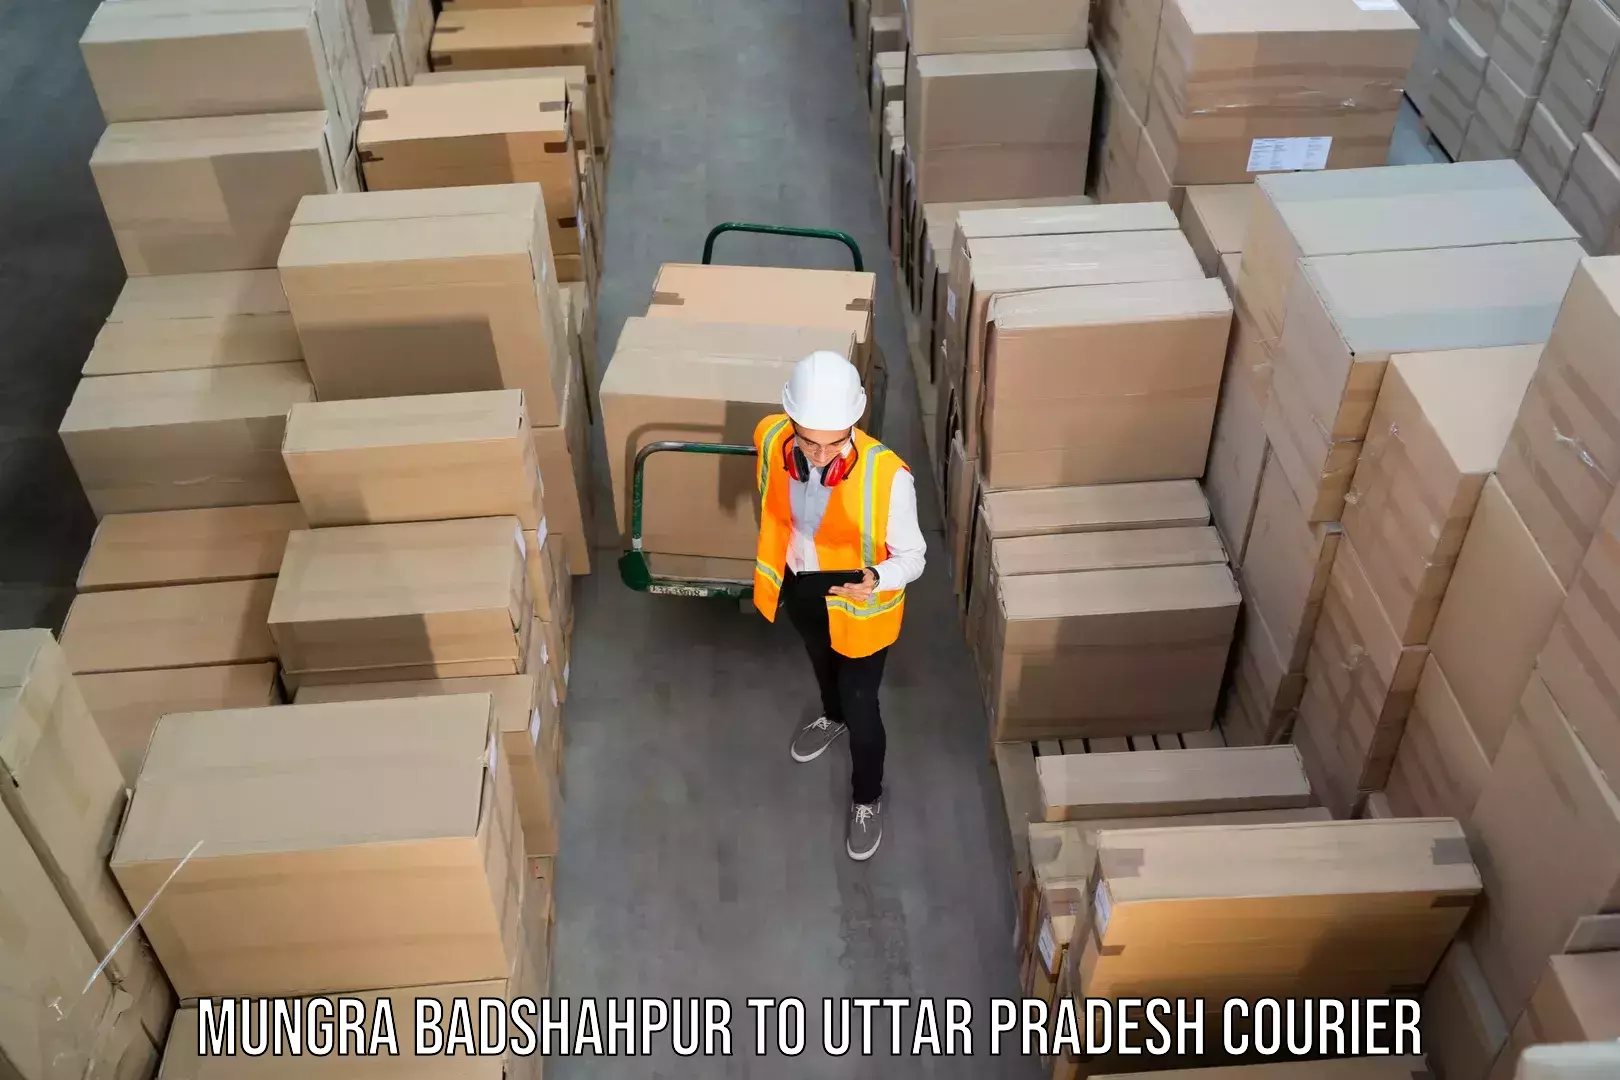 Fast delivery service Mungra Badshahpur to Muzaffarnagar